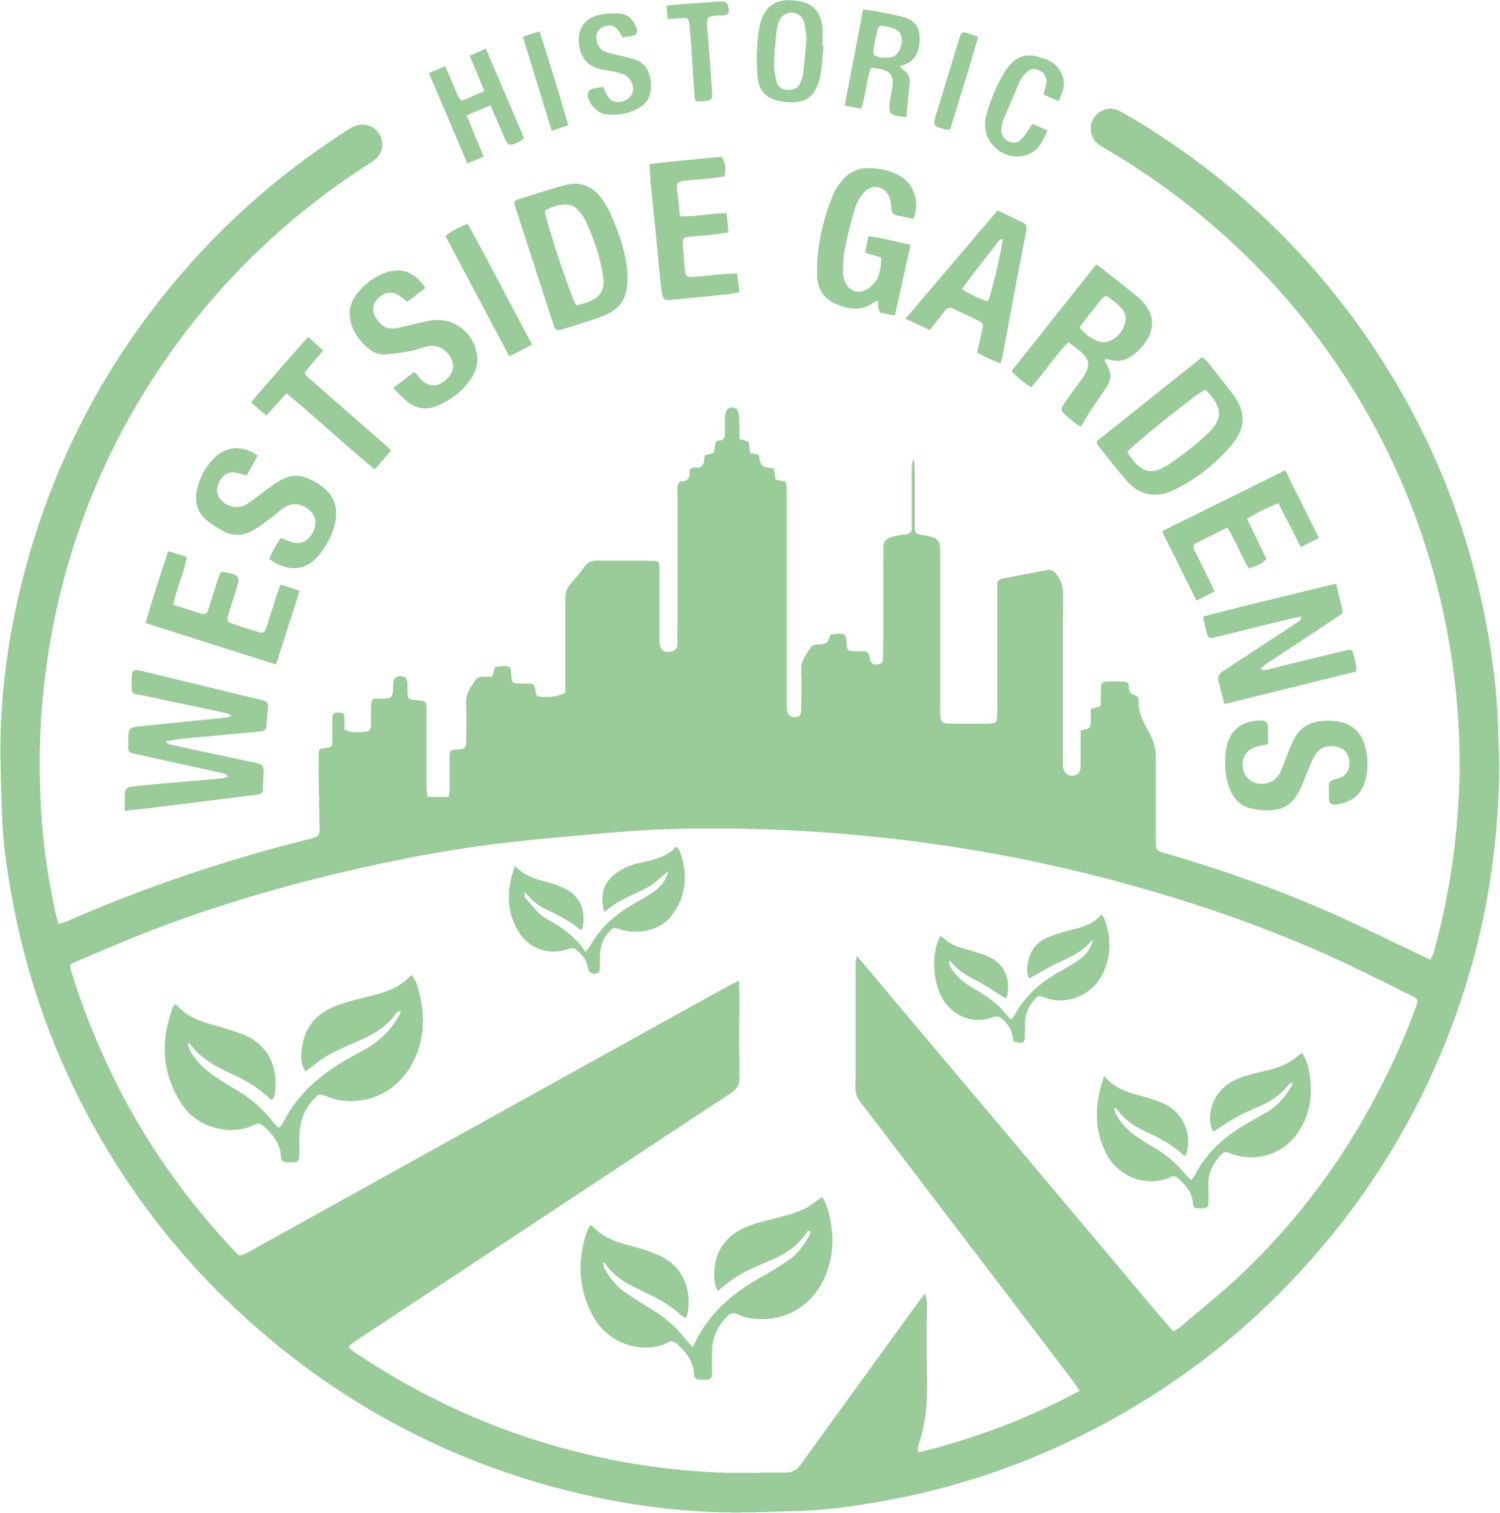 Historic Westside Gardens